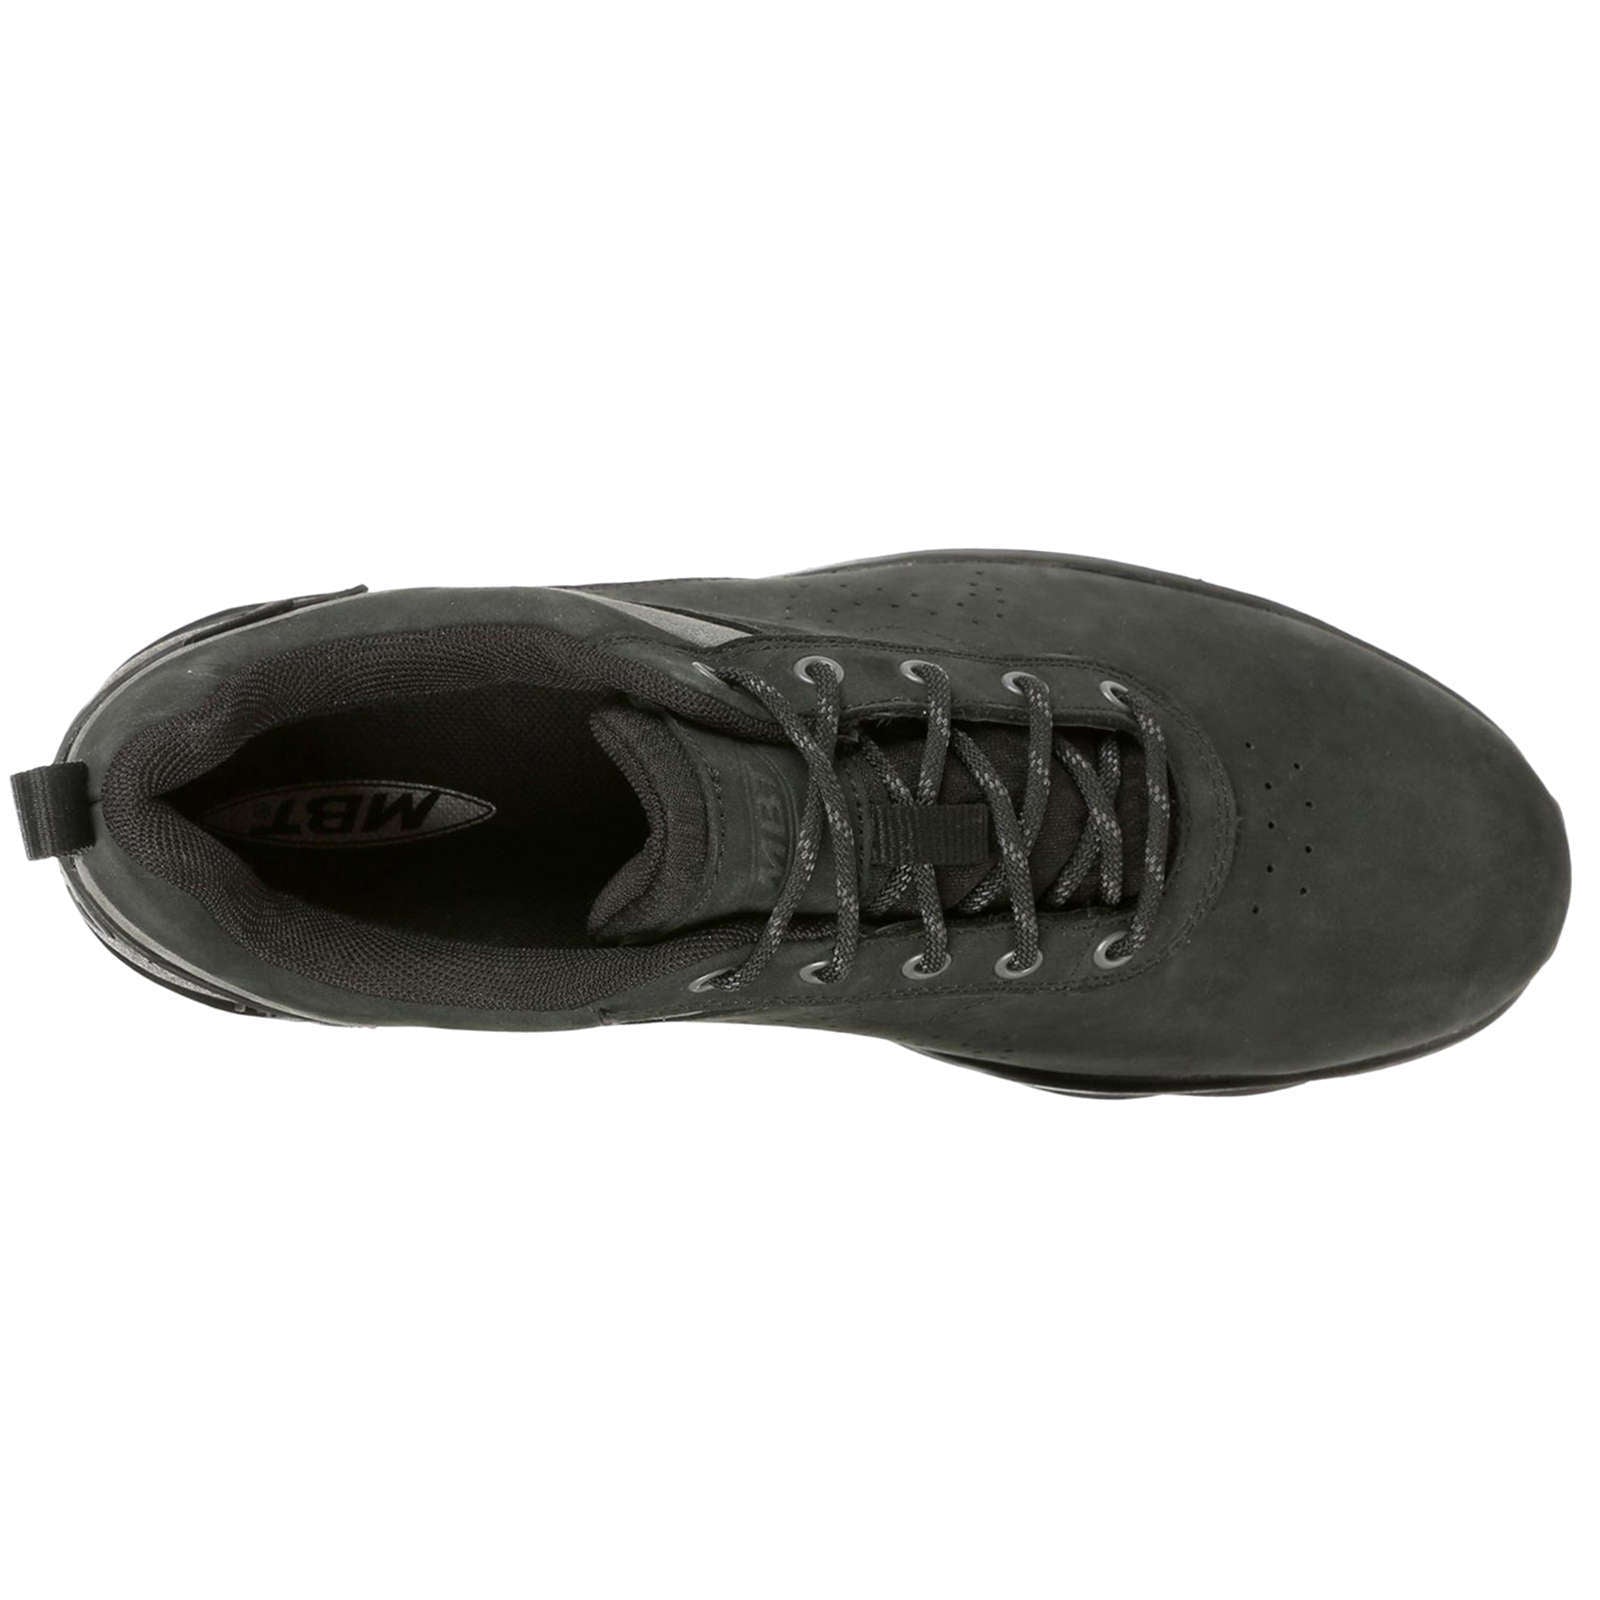 MBT Kibo GTX Waterproof Nubuck Leather Men's Hiking Shoes#color_black